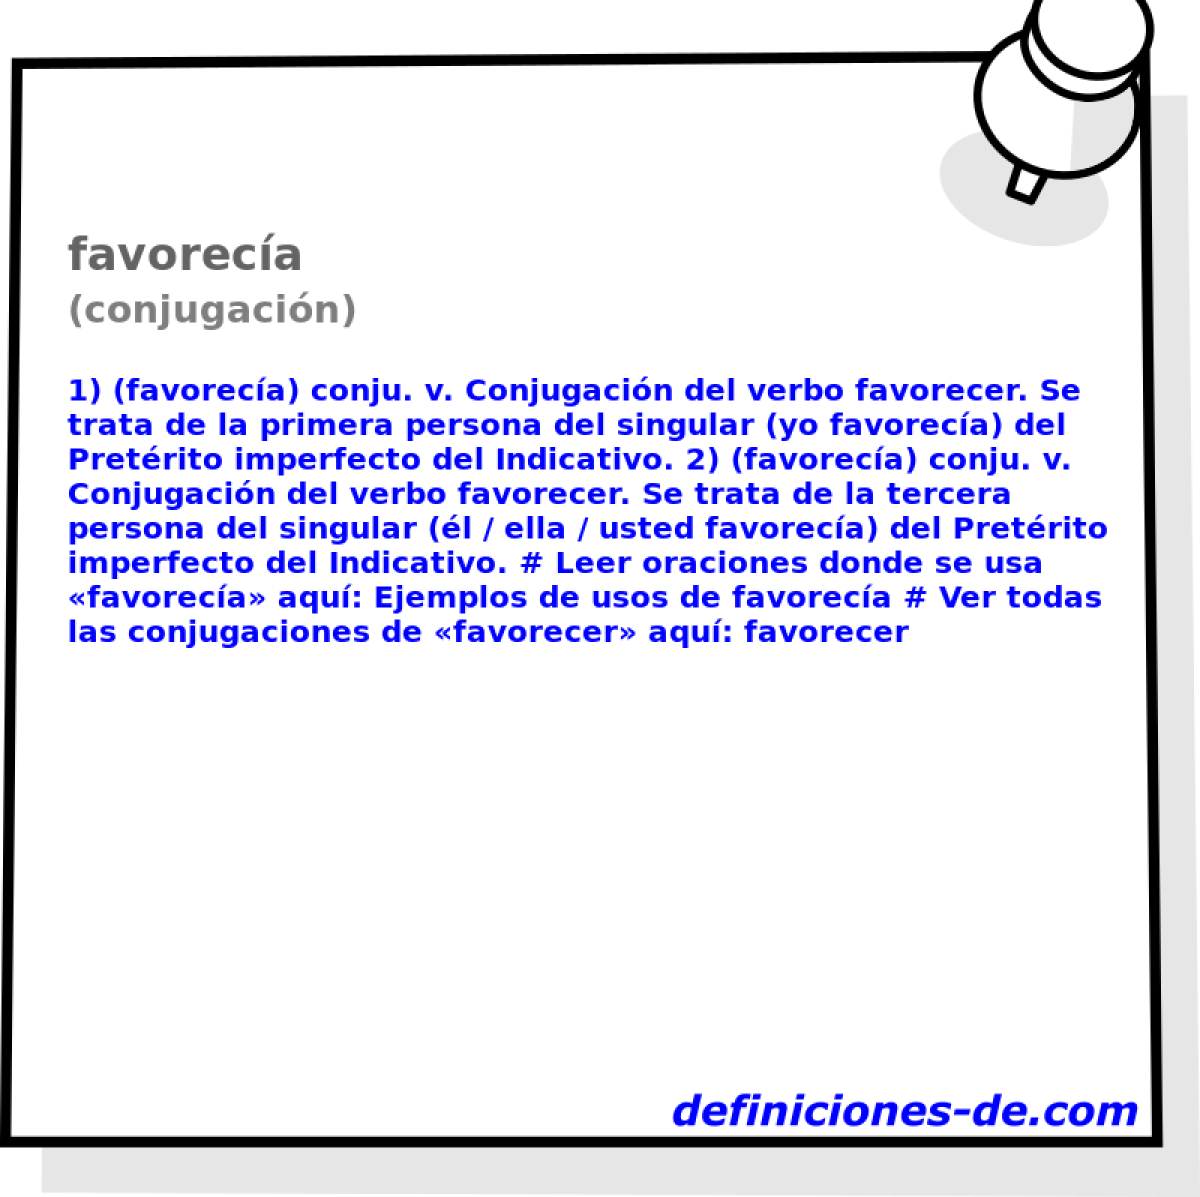 favoreca (conjugacin)